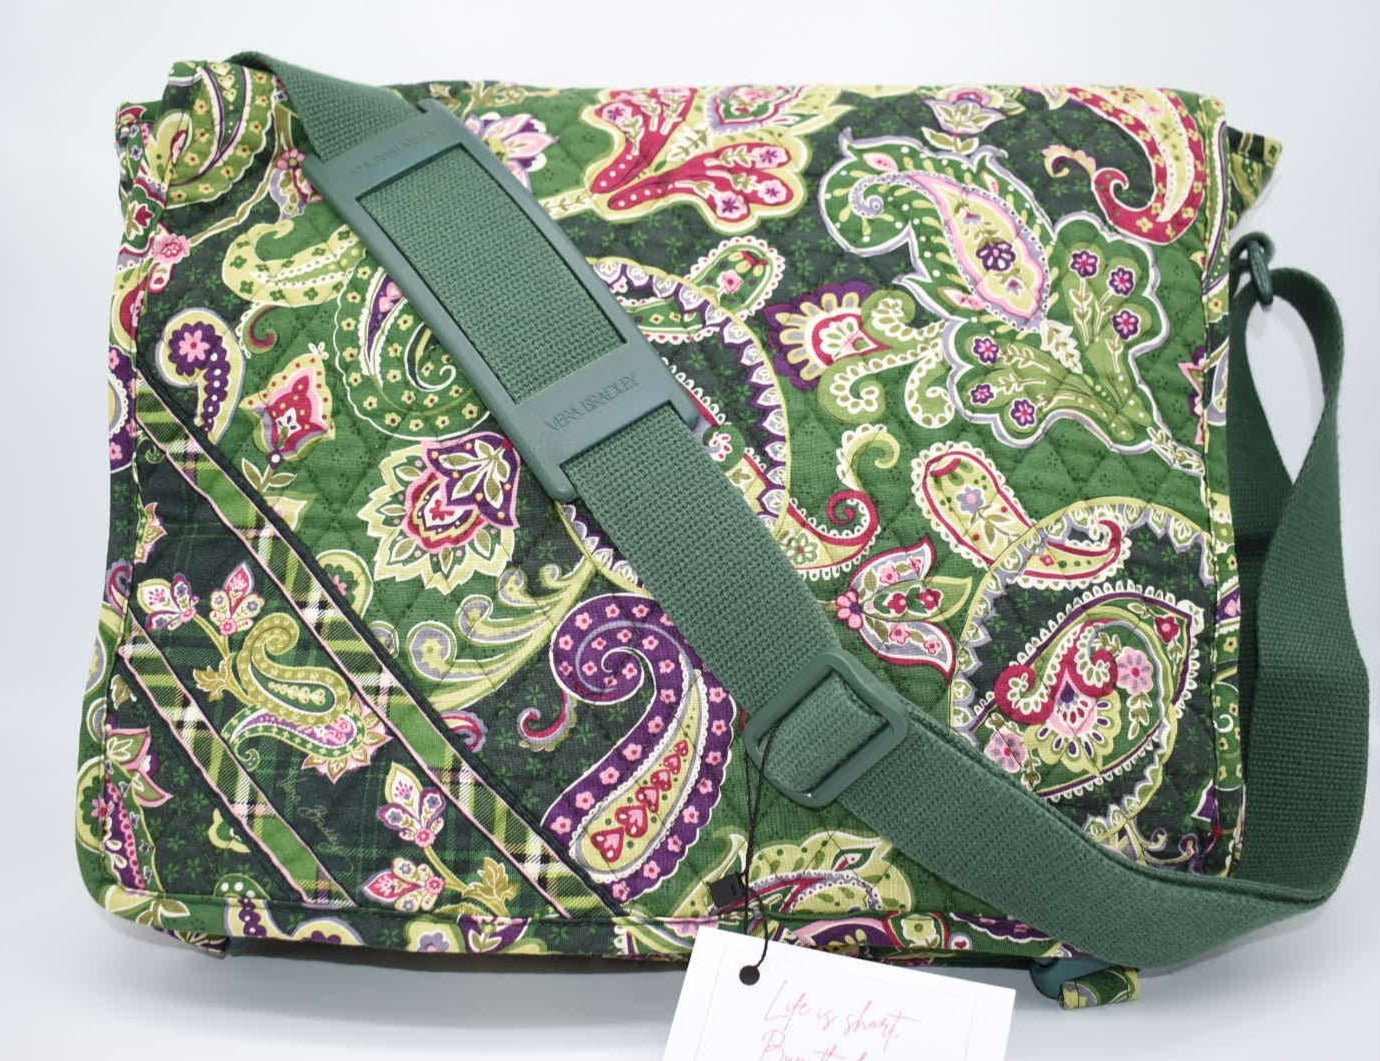 Vera Bradley Messenger Crossbody Bag in "Chelsea Green" Pattern